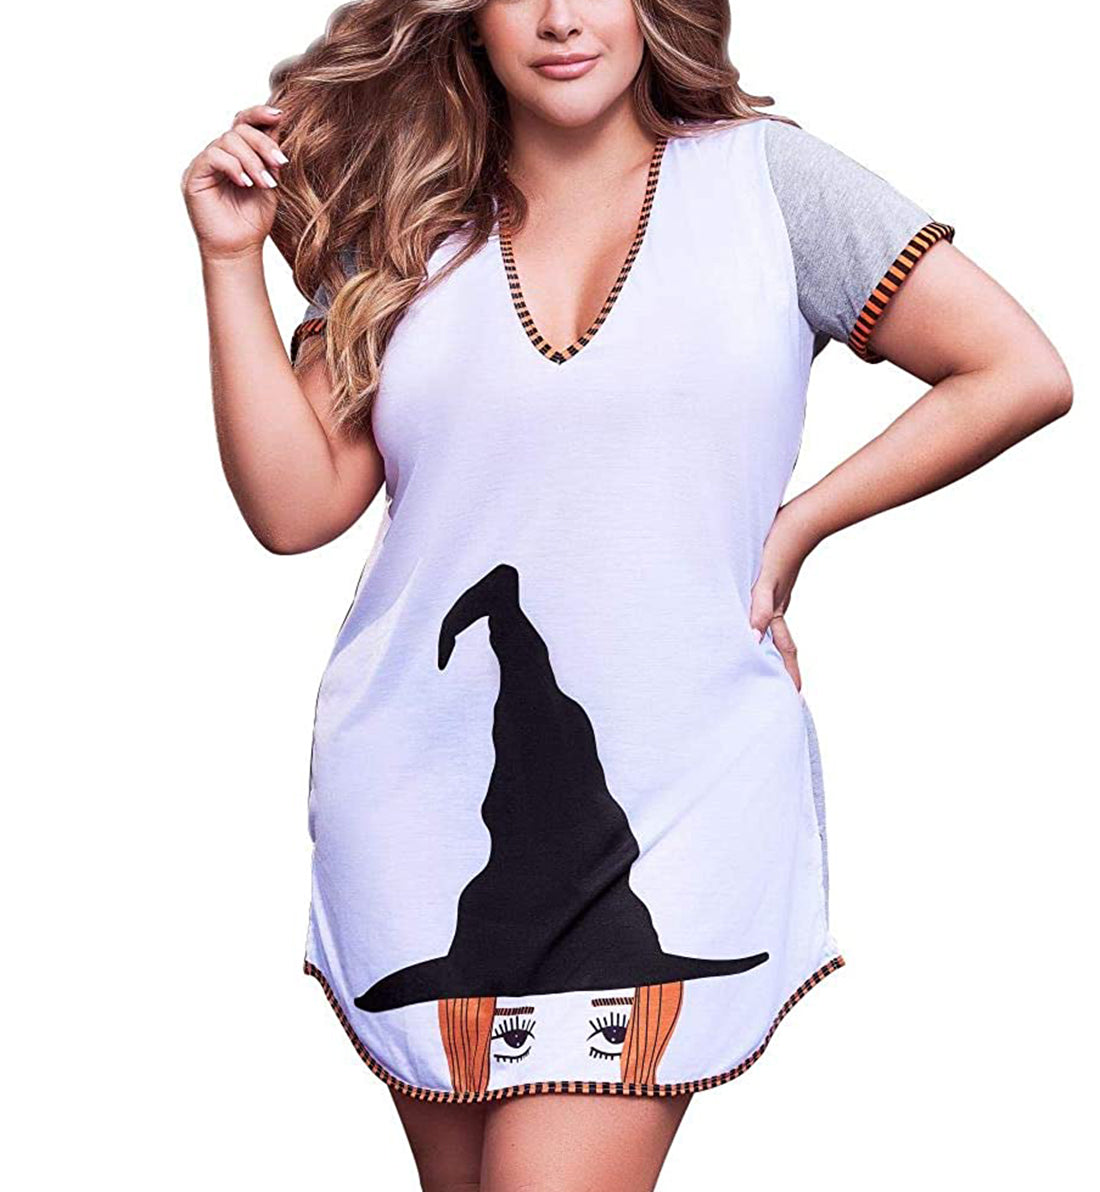 Mapale Halloween Witch Long Sleep Shirt Plus Size (7323X),1X/2X,Grey/White Print - Grey/White Print,1X/2X